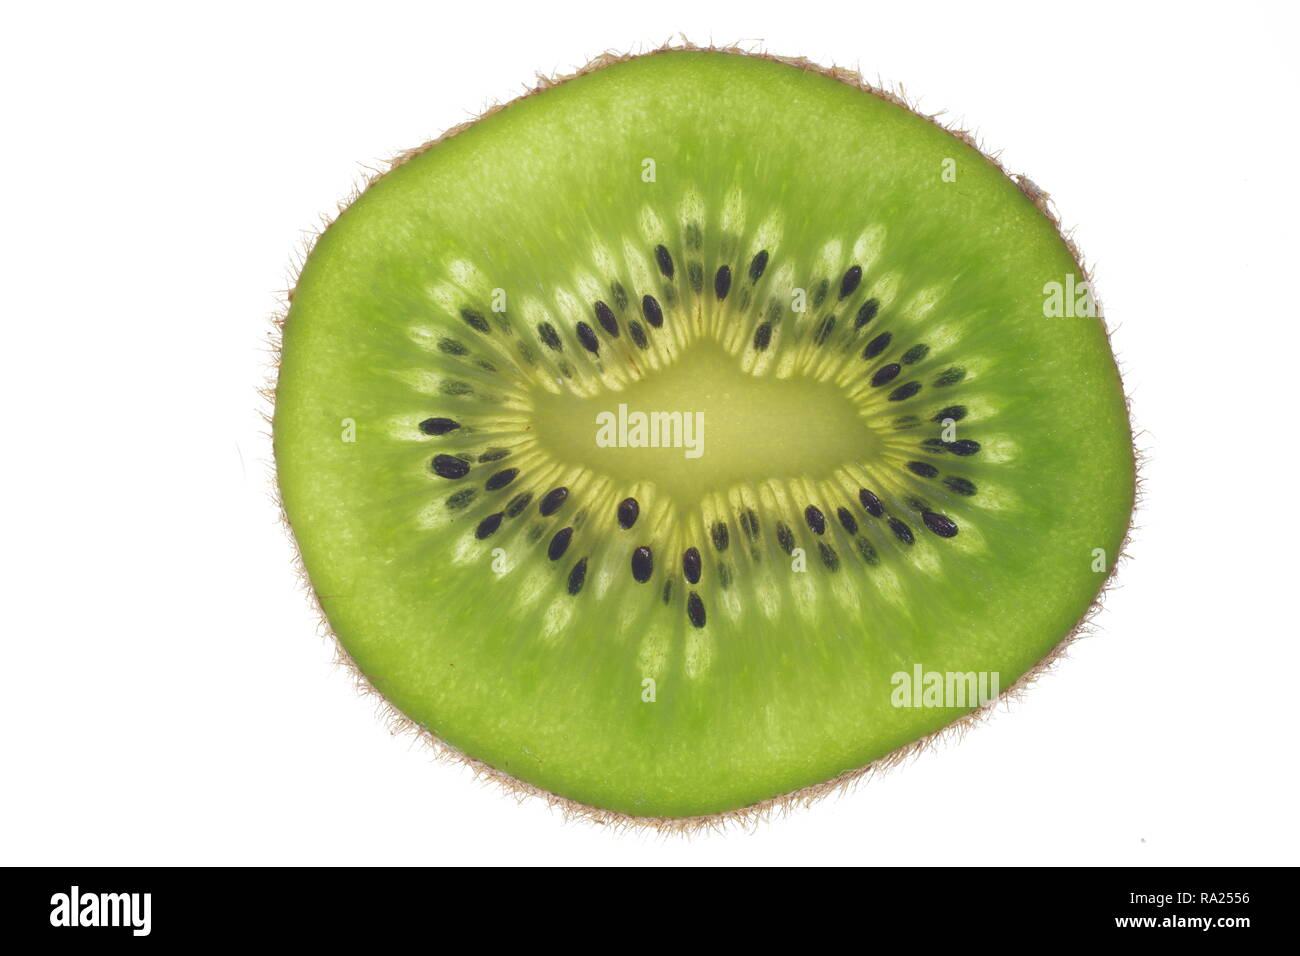 cut kiwi fruit on a white background Stock Photo